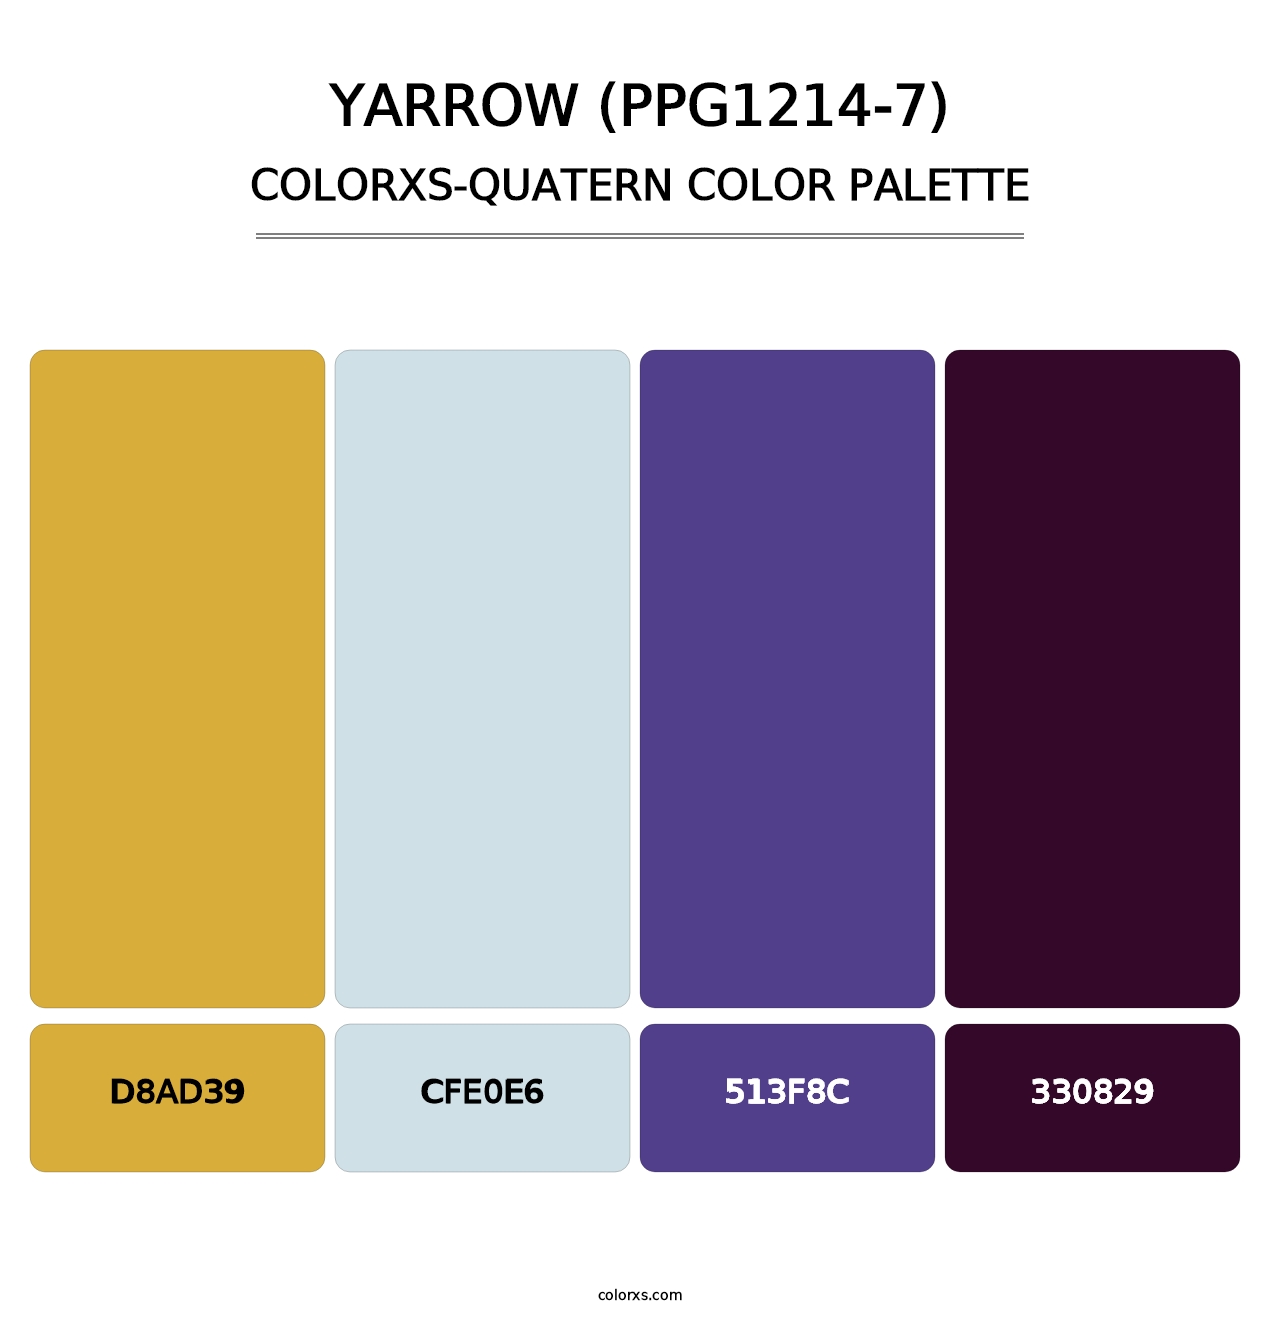 Yarrow (PPG1214-7) - Colorxs Quatern Palette